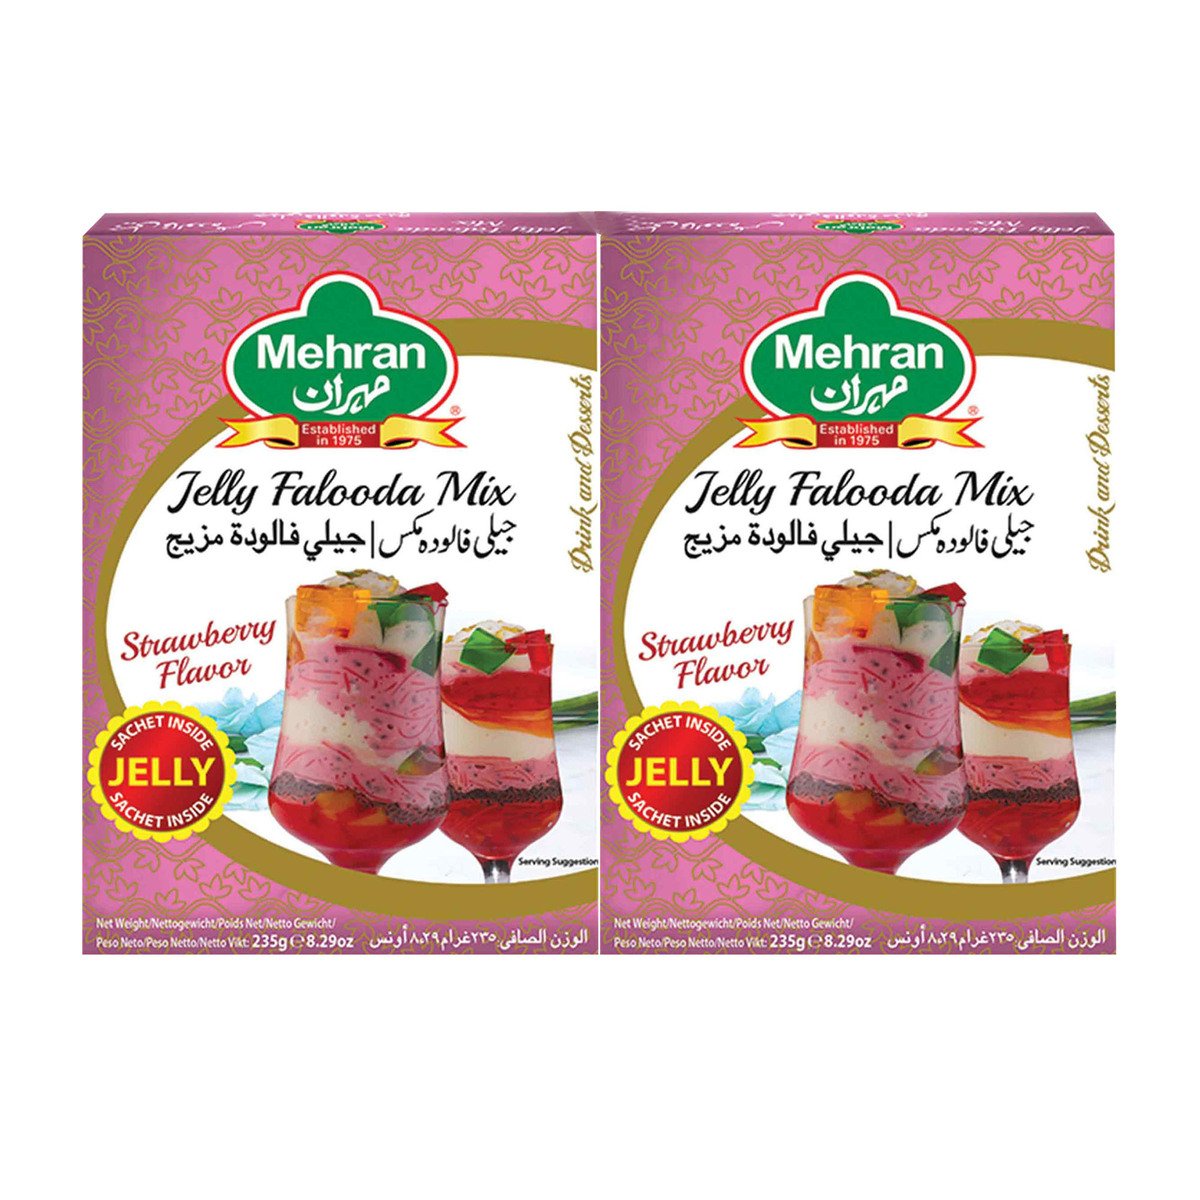 Mehran Strawberry Flavor Jelly Falooda Mix Value Pack 2 x 235 g